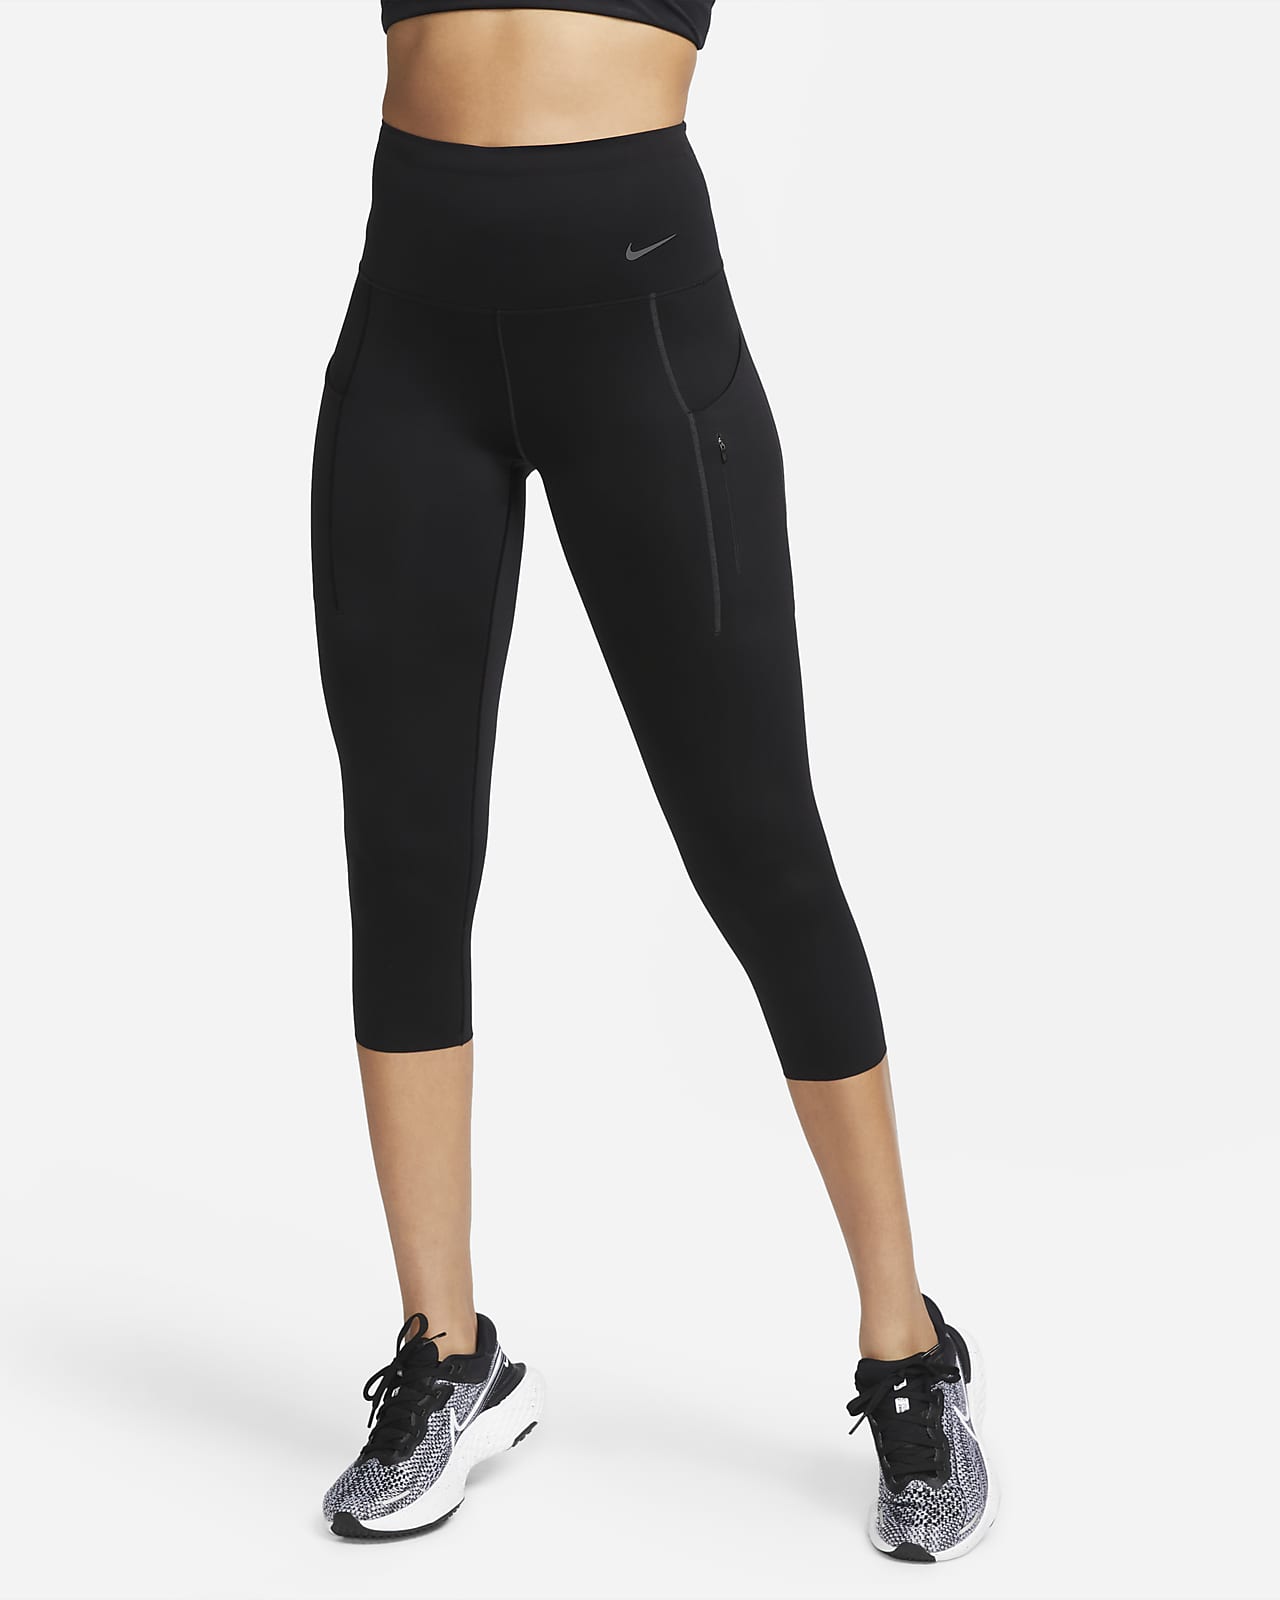 Nike Dri-Fit Capri Leggings Pink Size M - $19 (81% Off Retail